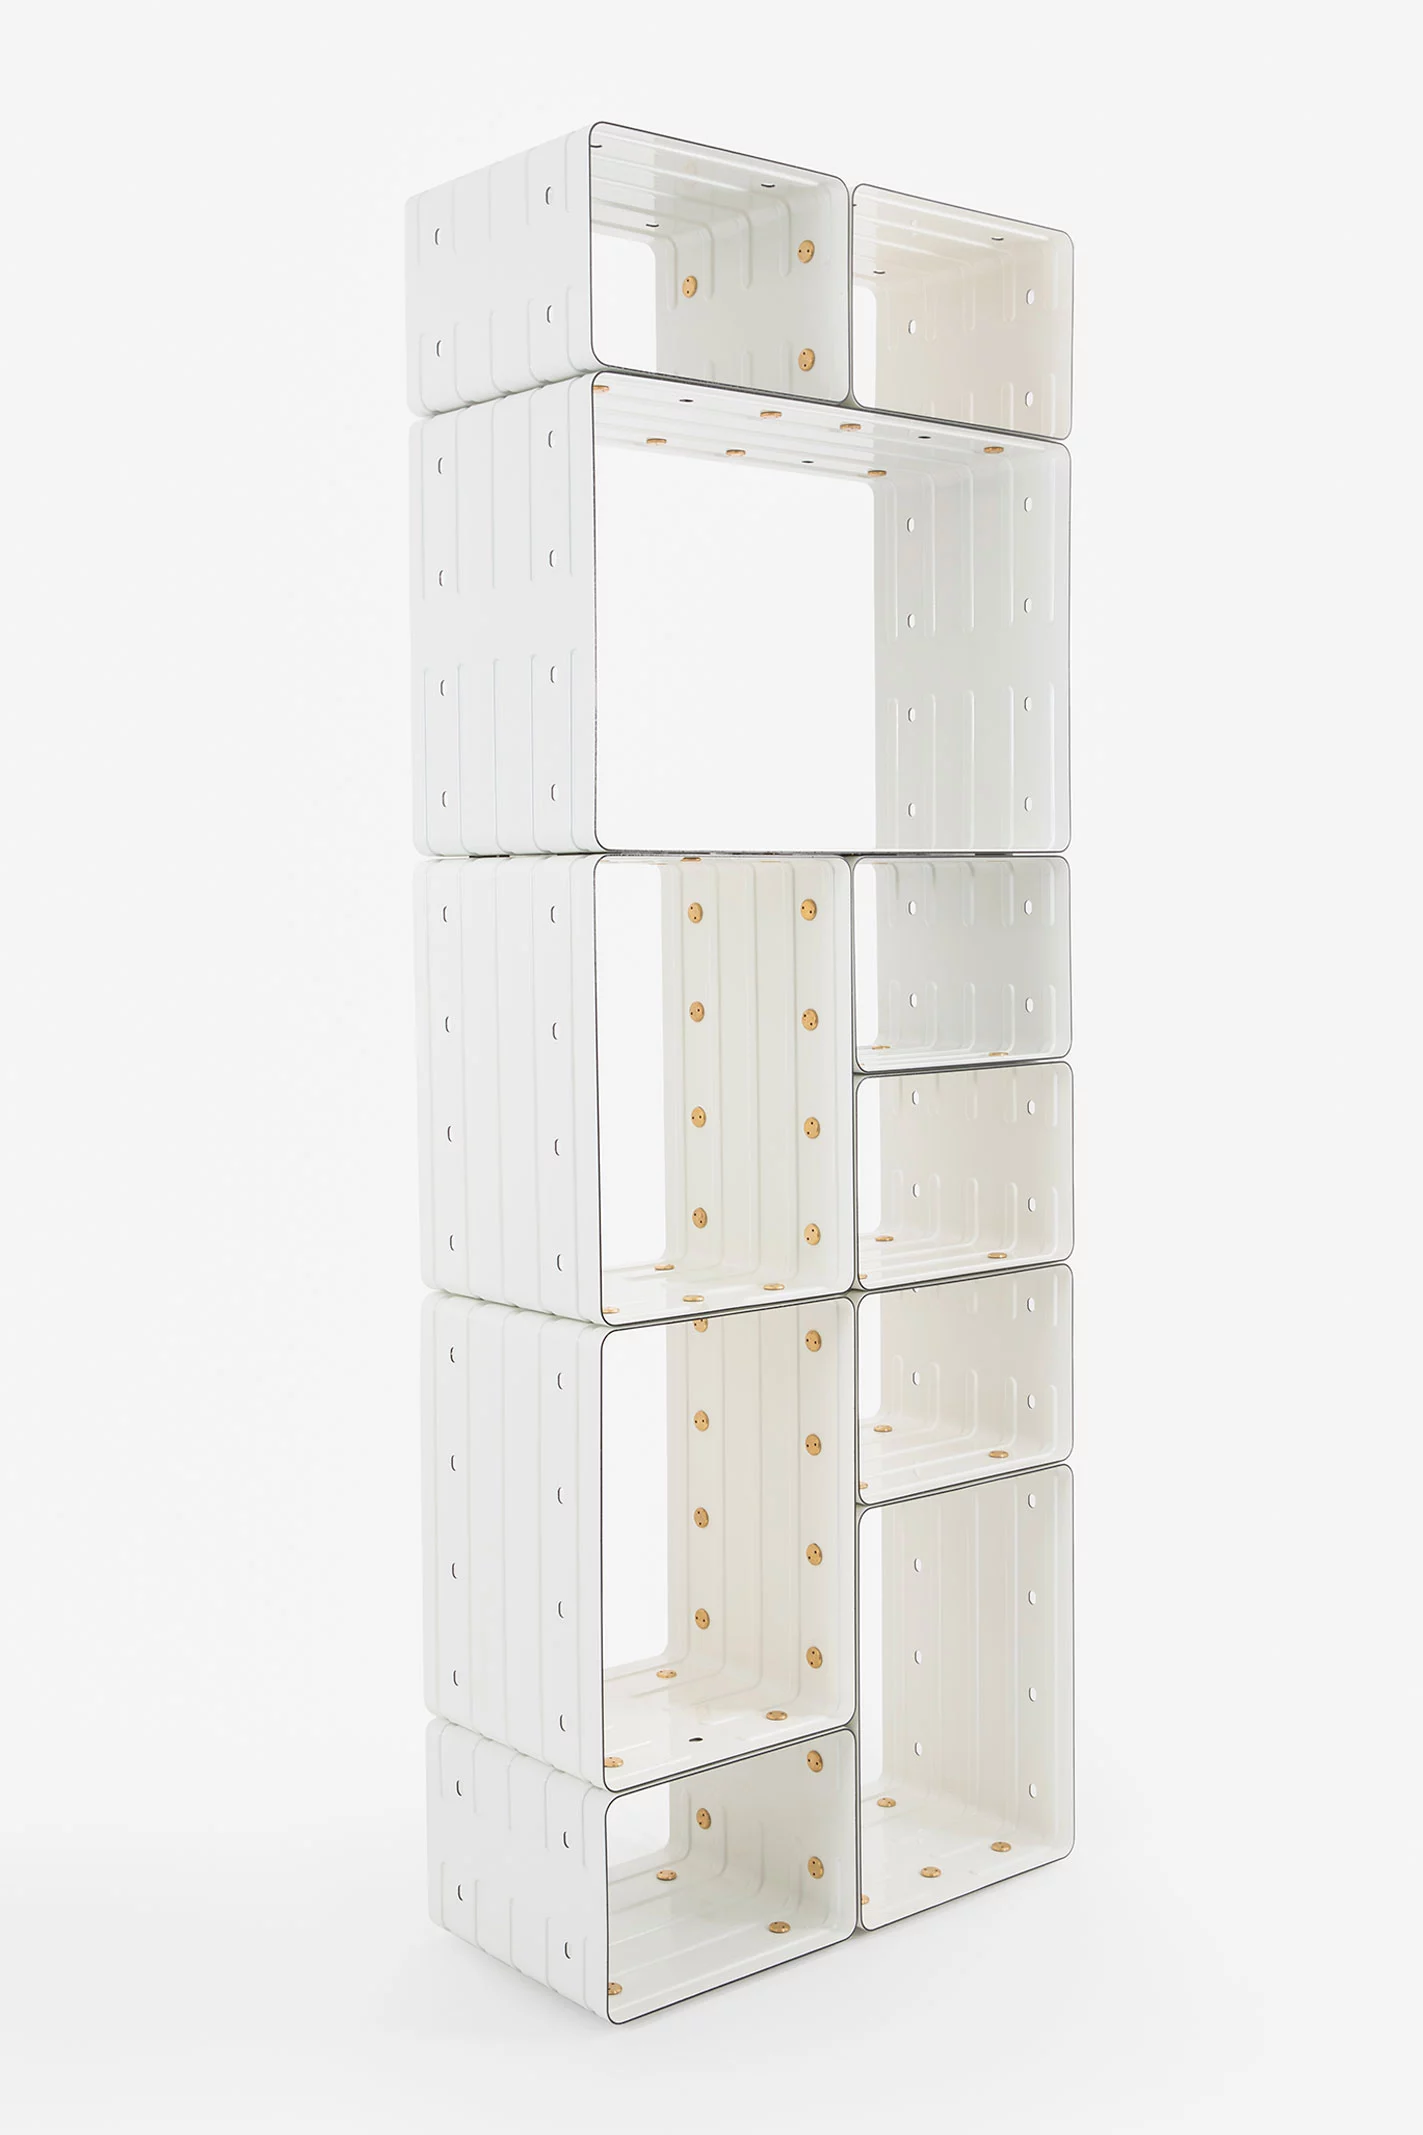 Quobus 1,3,6 monochromatic - Marc Newson - Bookshelf - Galerie kreo